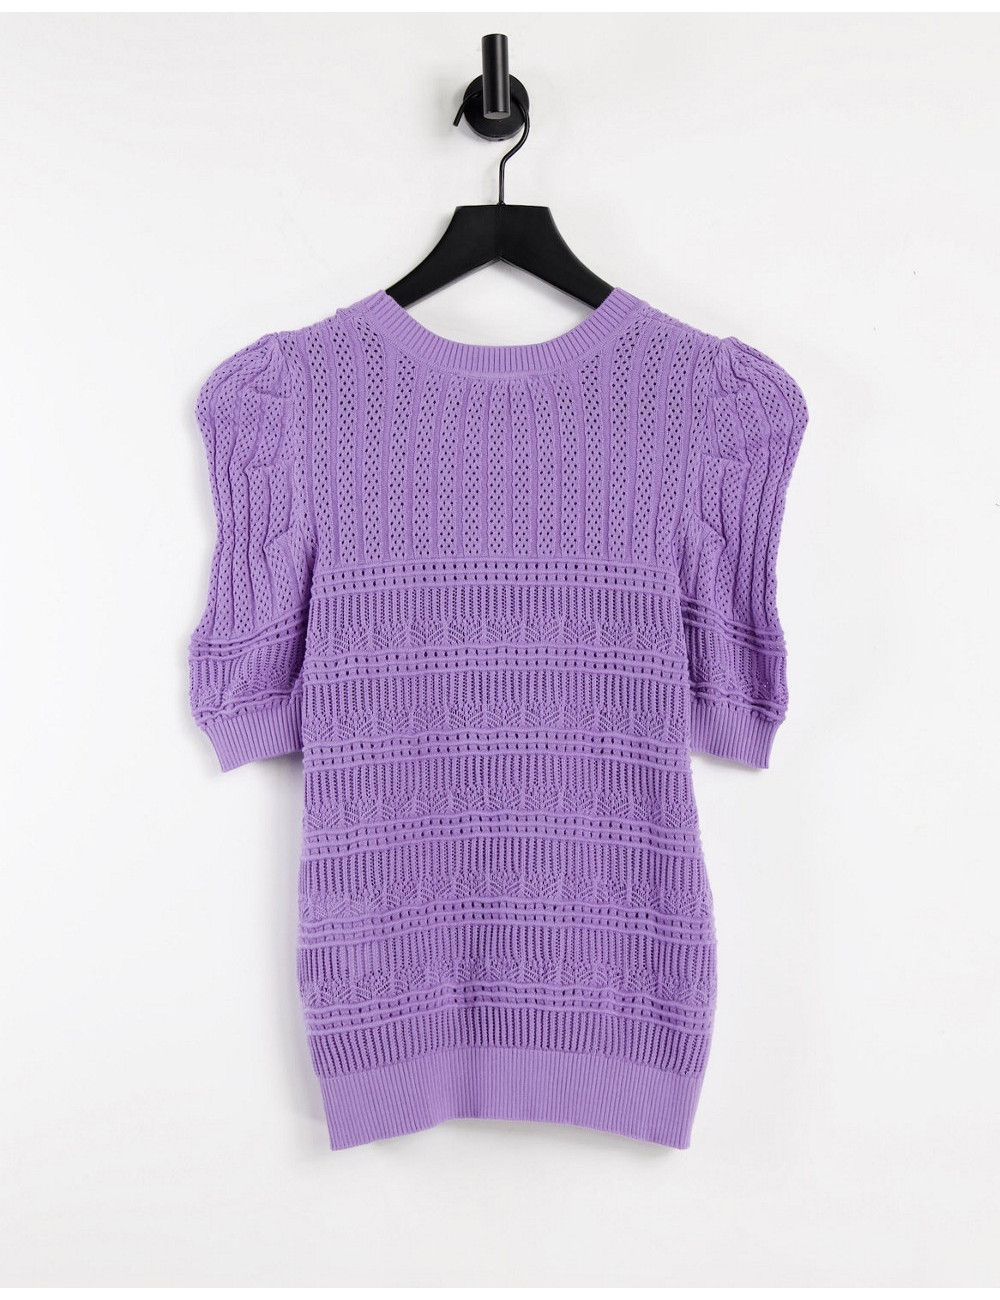 Morgan fine knit top in lilac